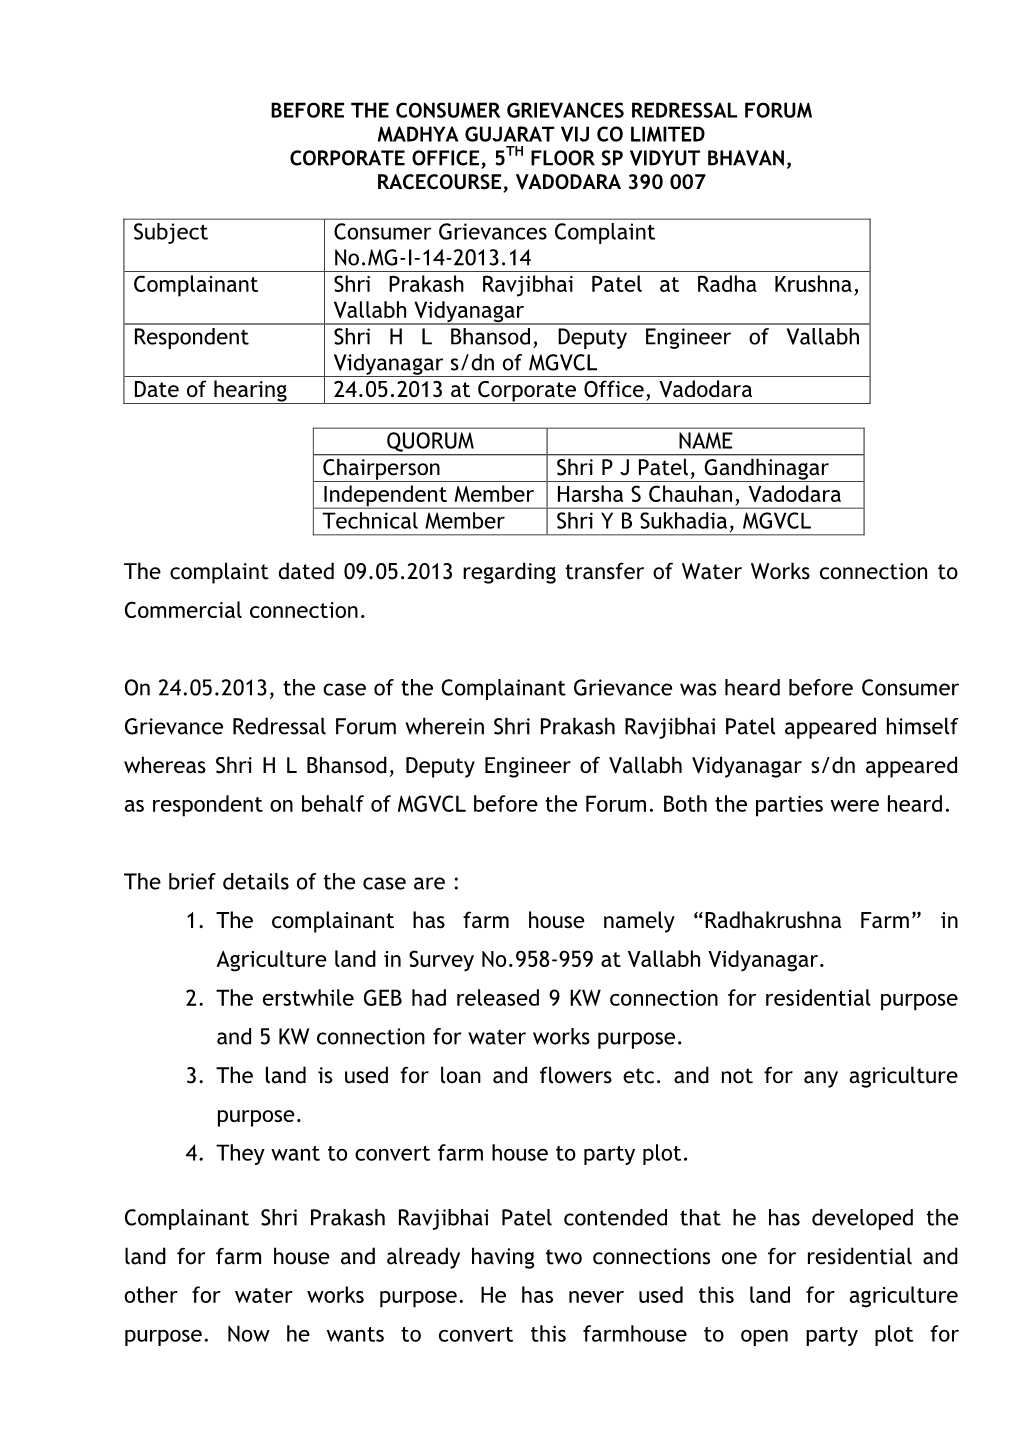 Subject Consumer Grievances Complaint No.MG-I-14-2013.14